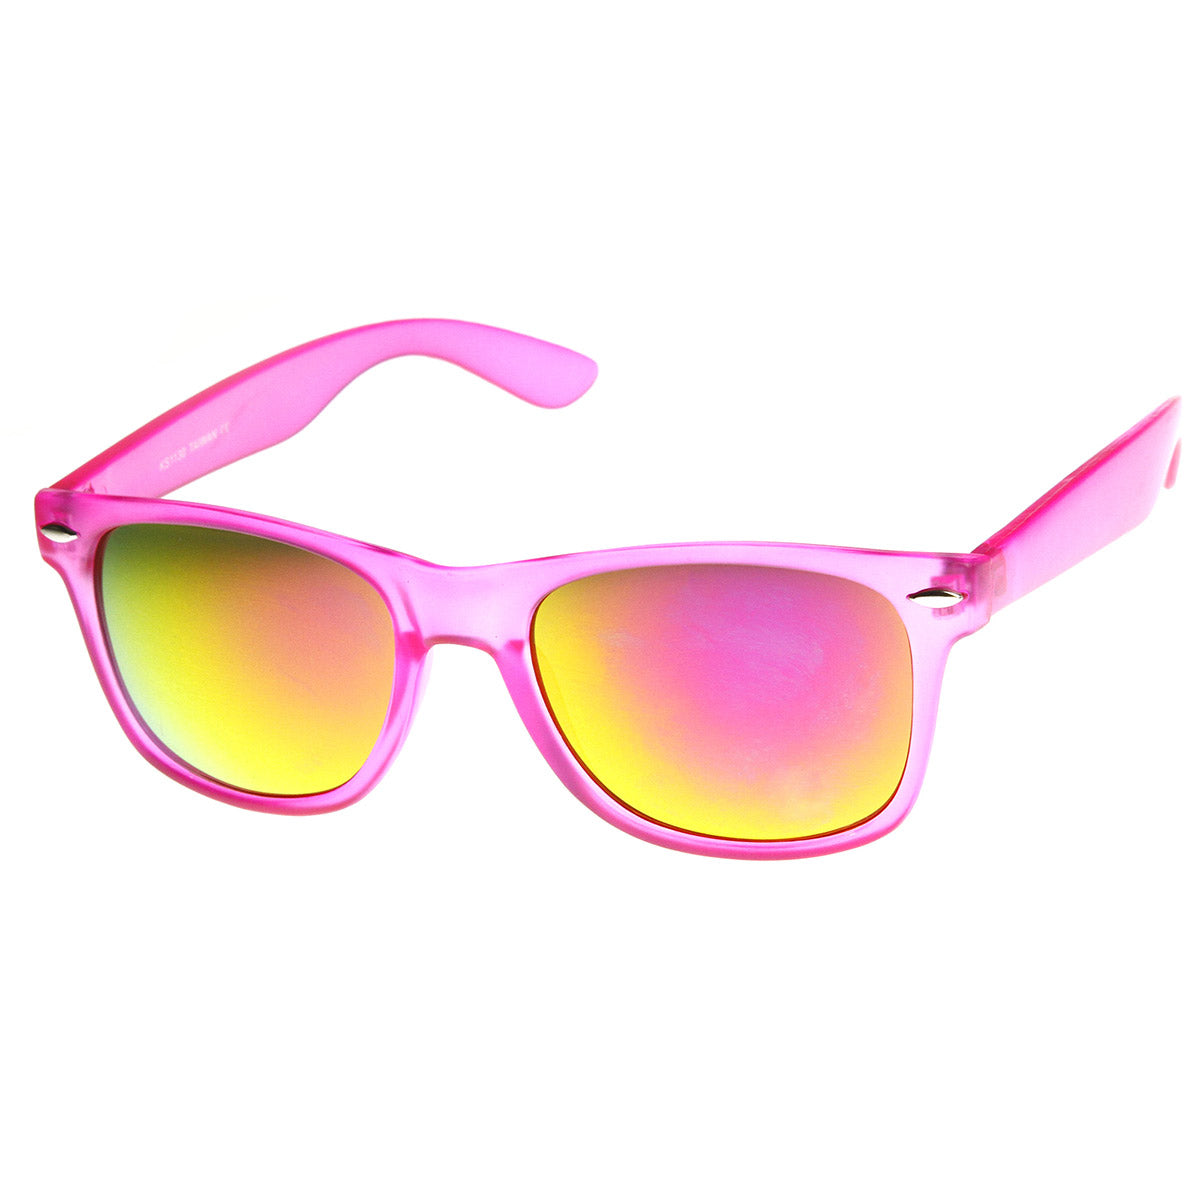 Update more than 133 neon wayfarer sunglasses latest